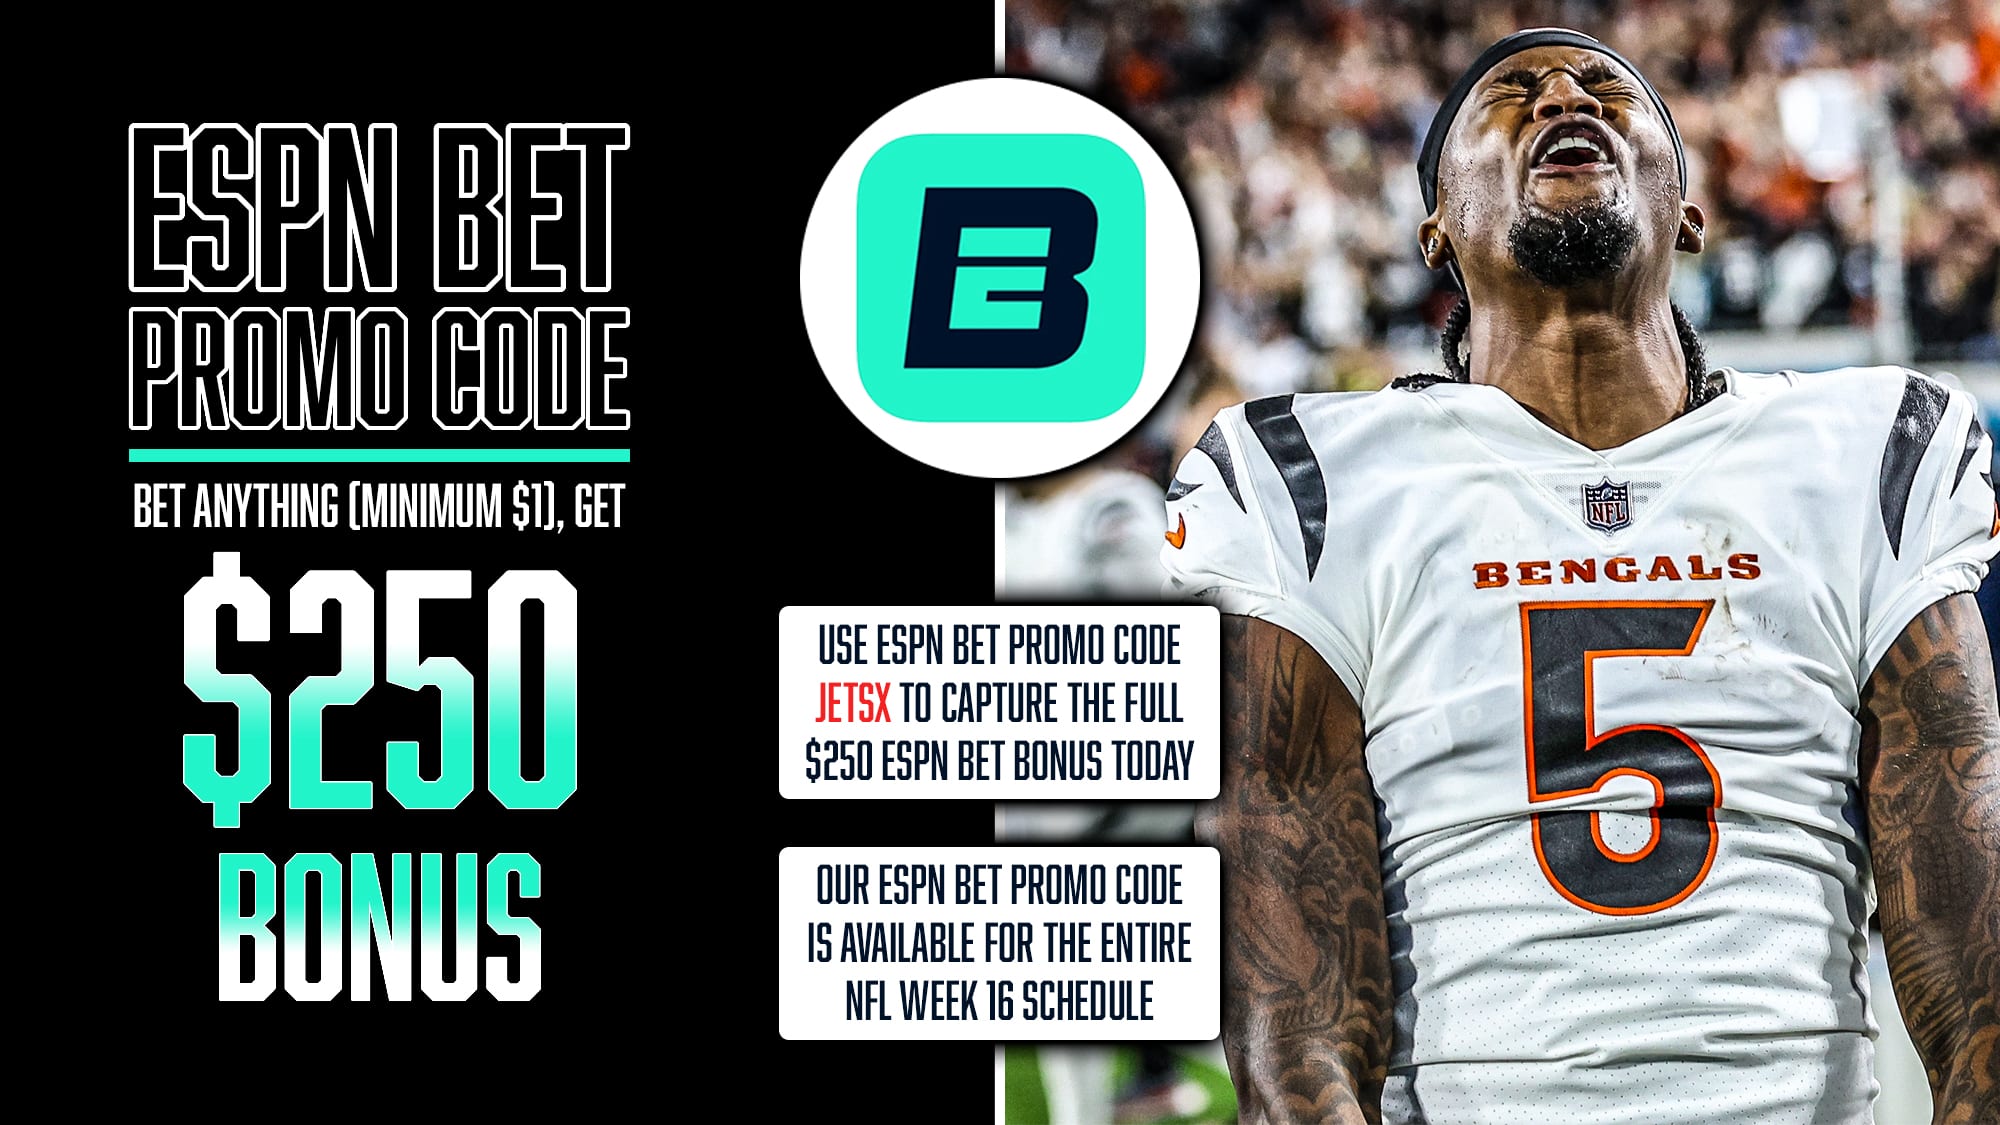 ESPN Bet NFL Week 16, Promo Code JETSX, $250 Bonus